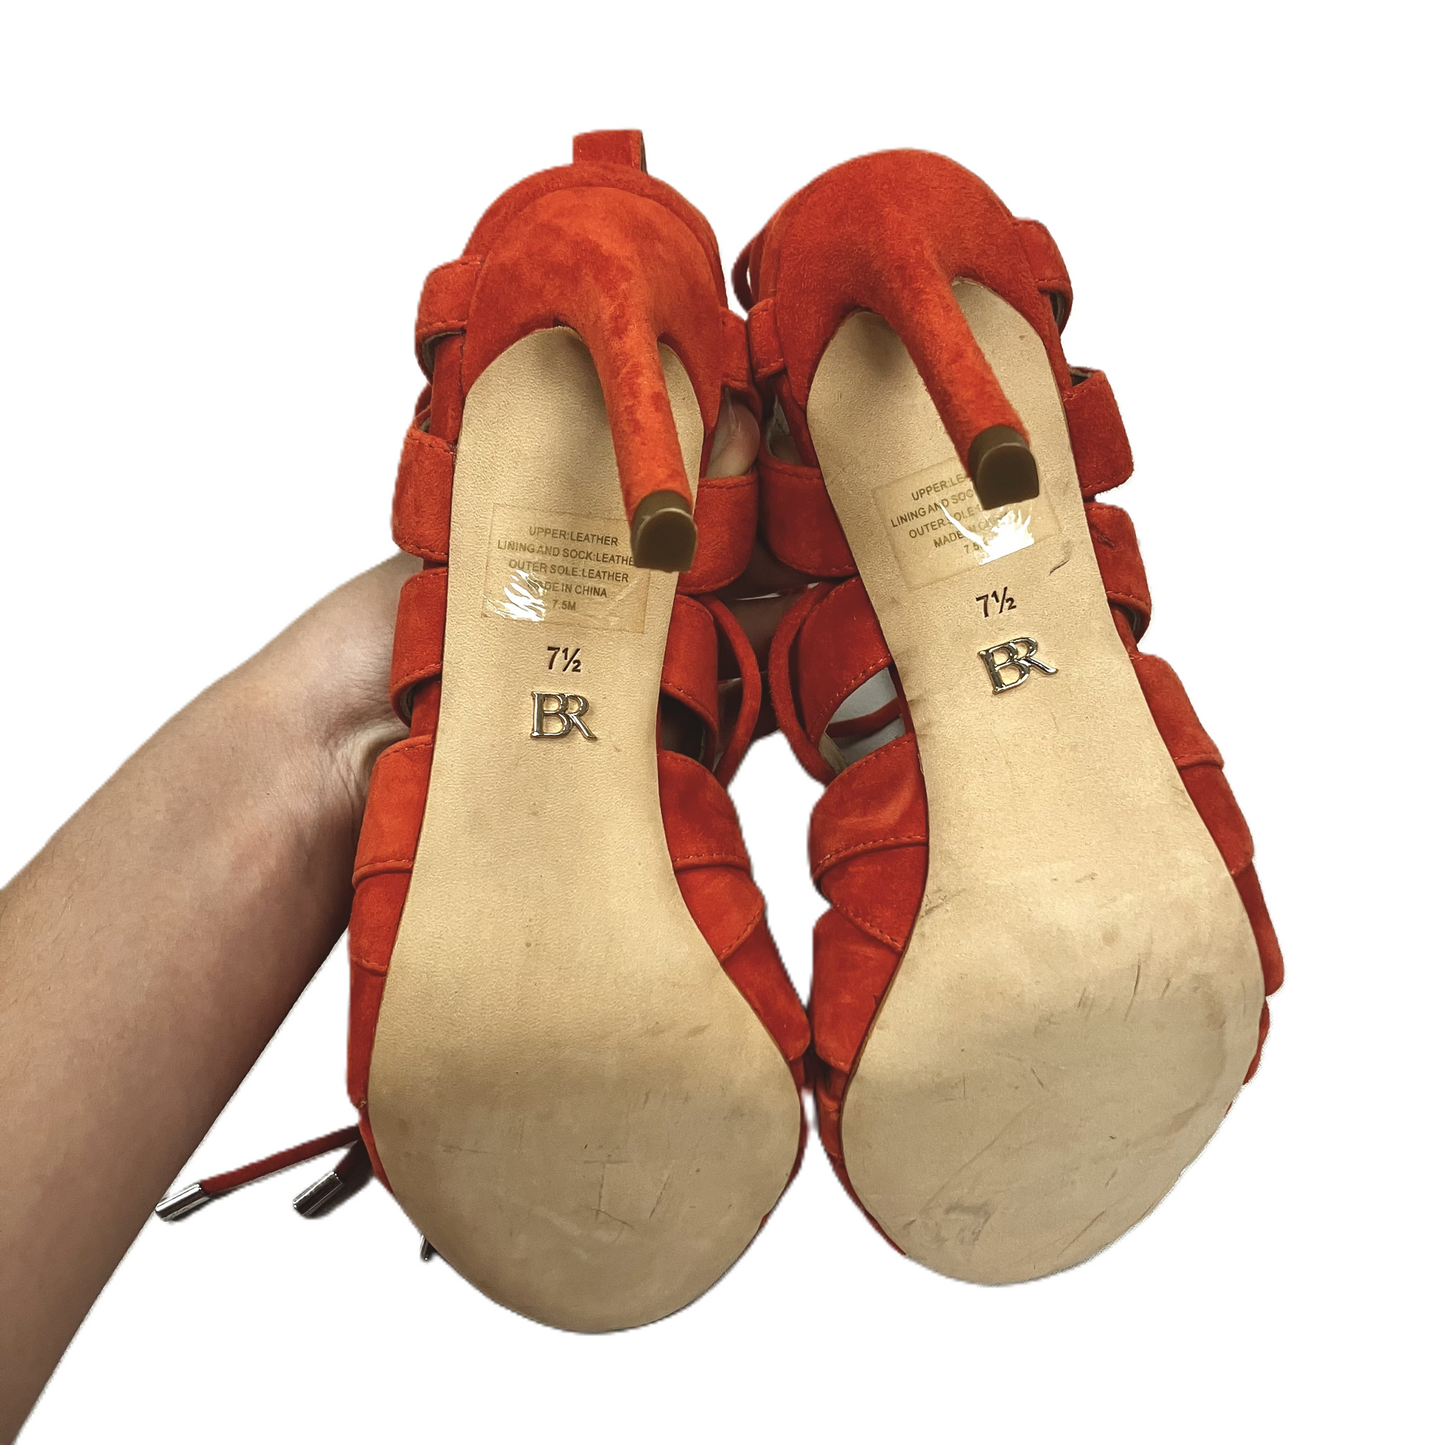 Orange Sandals Heels Stiletto By Banana Republic, Size: 7.5